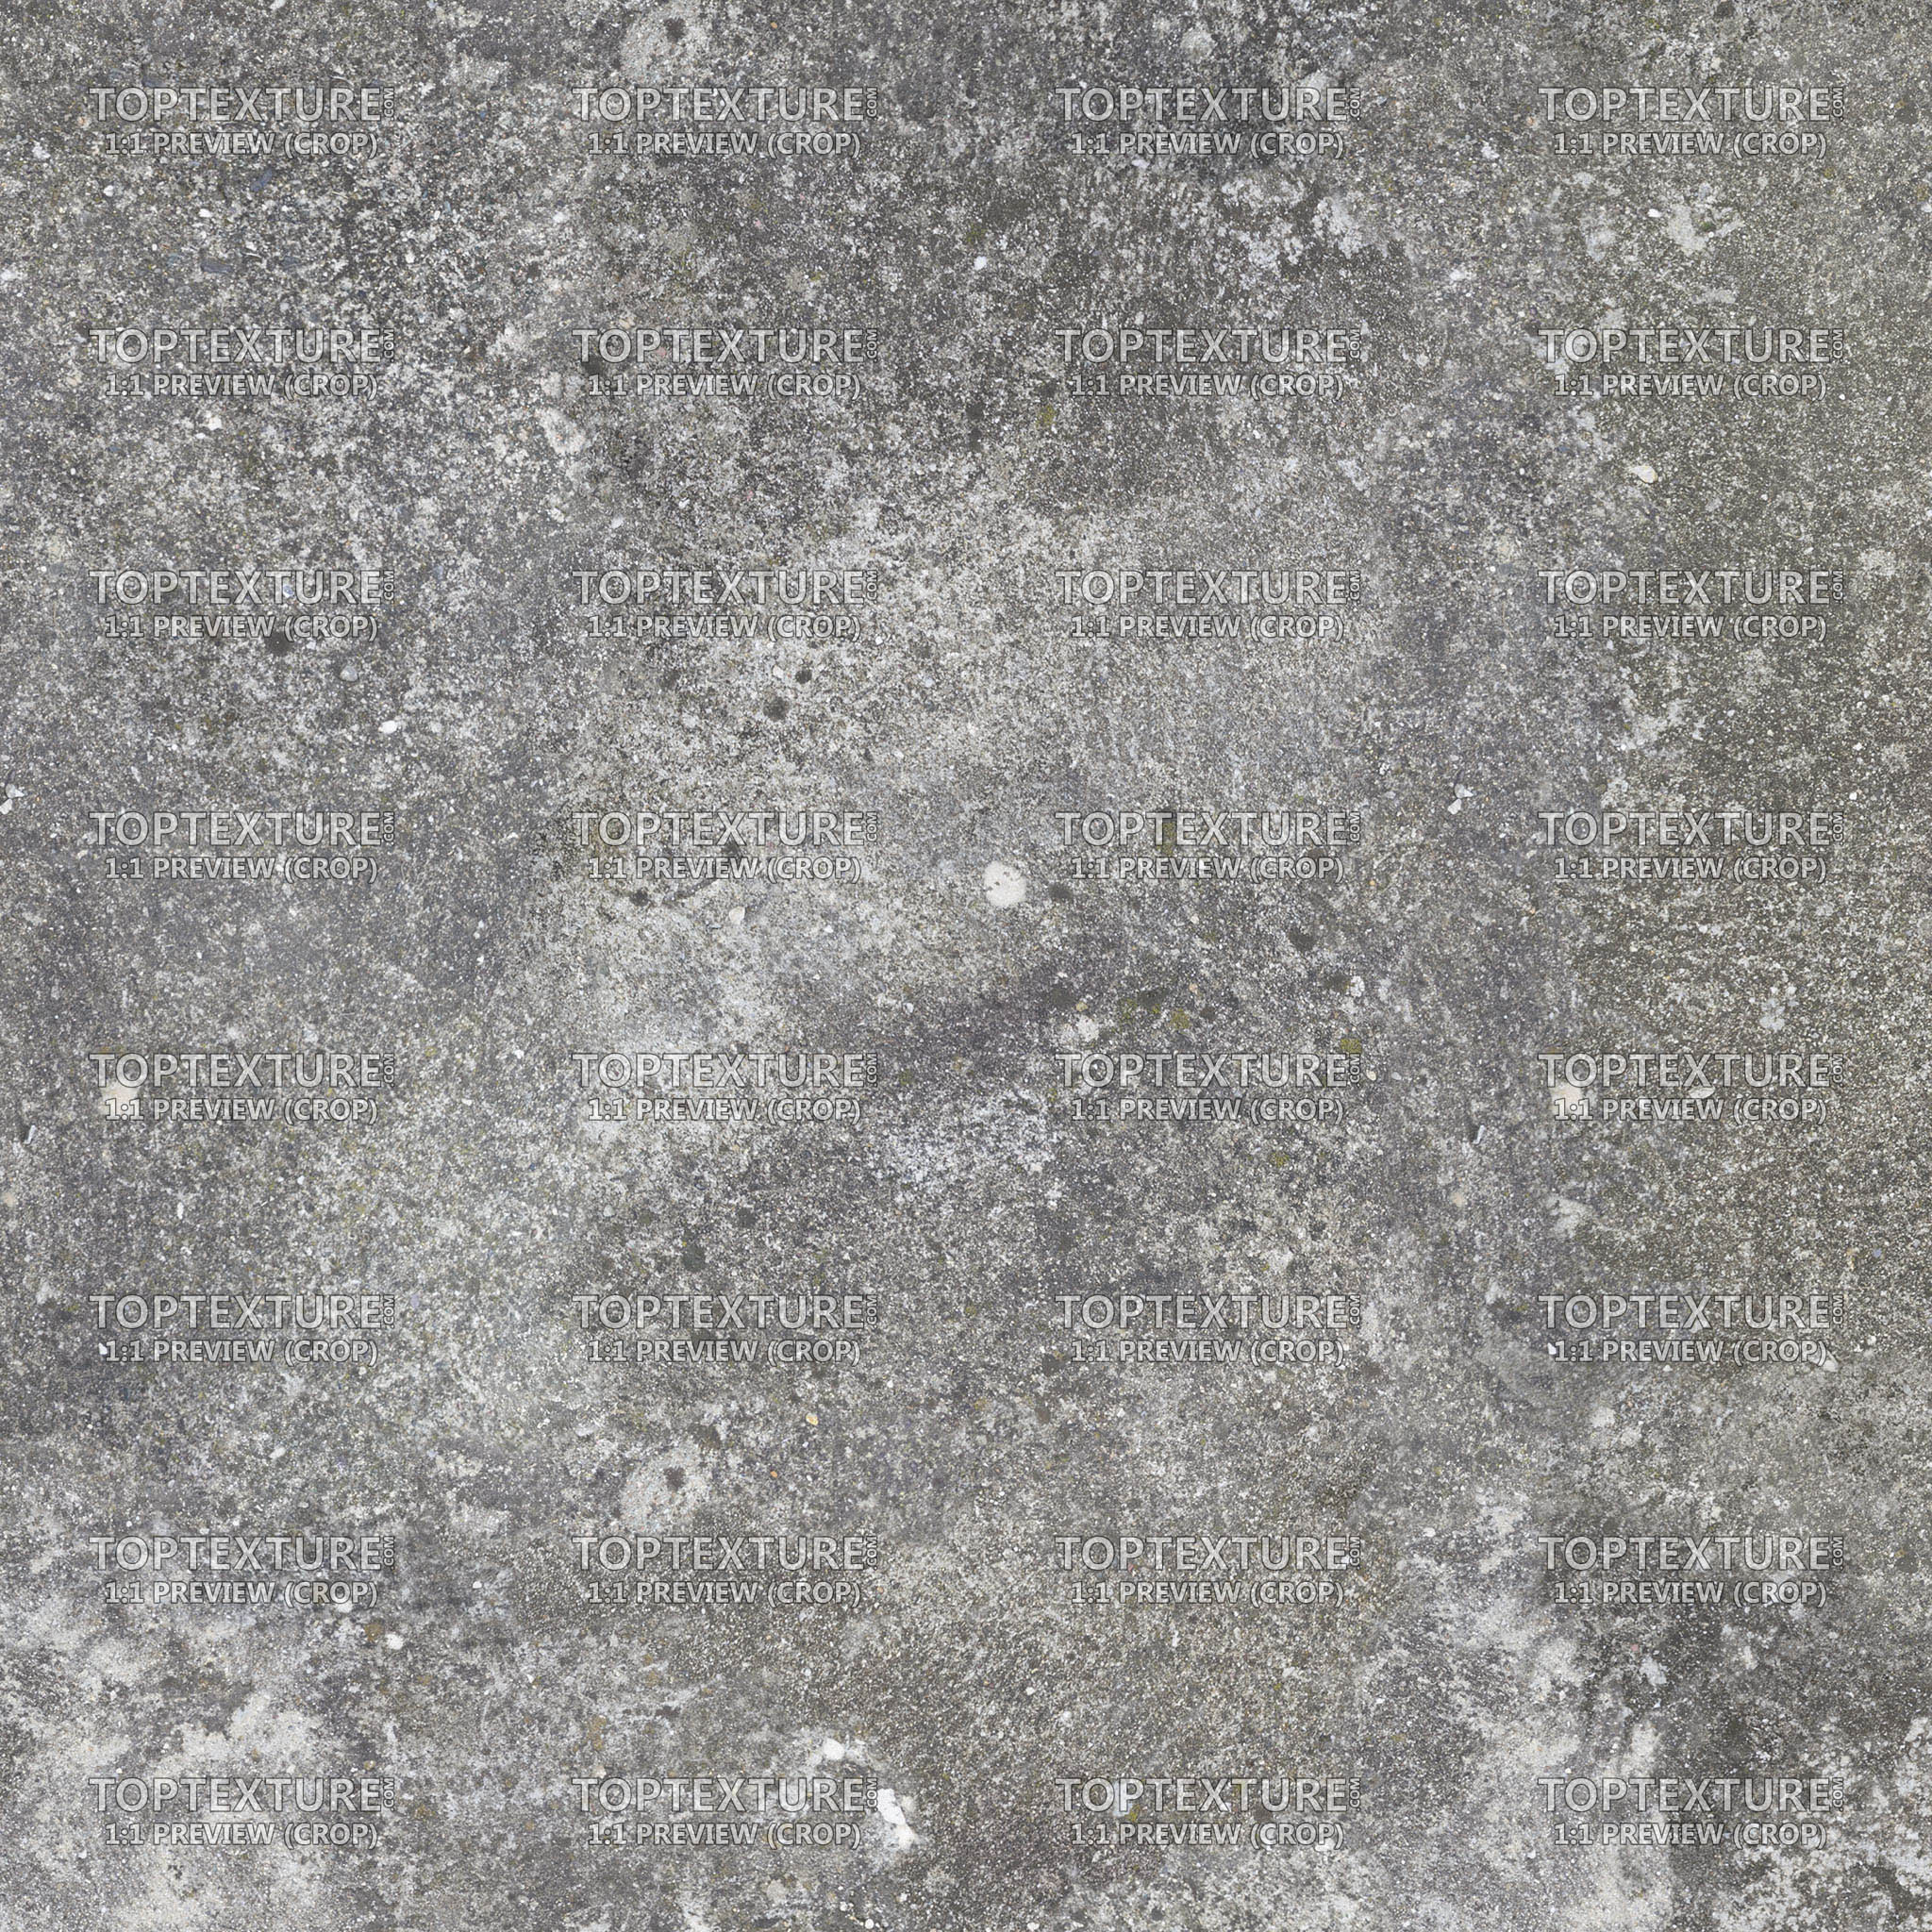 Dirty Dark Concrete Floor - 100% zoom